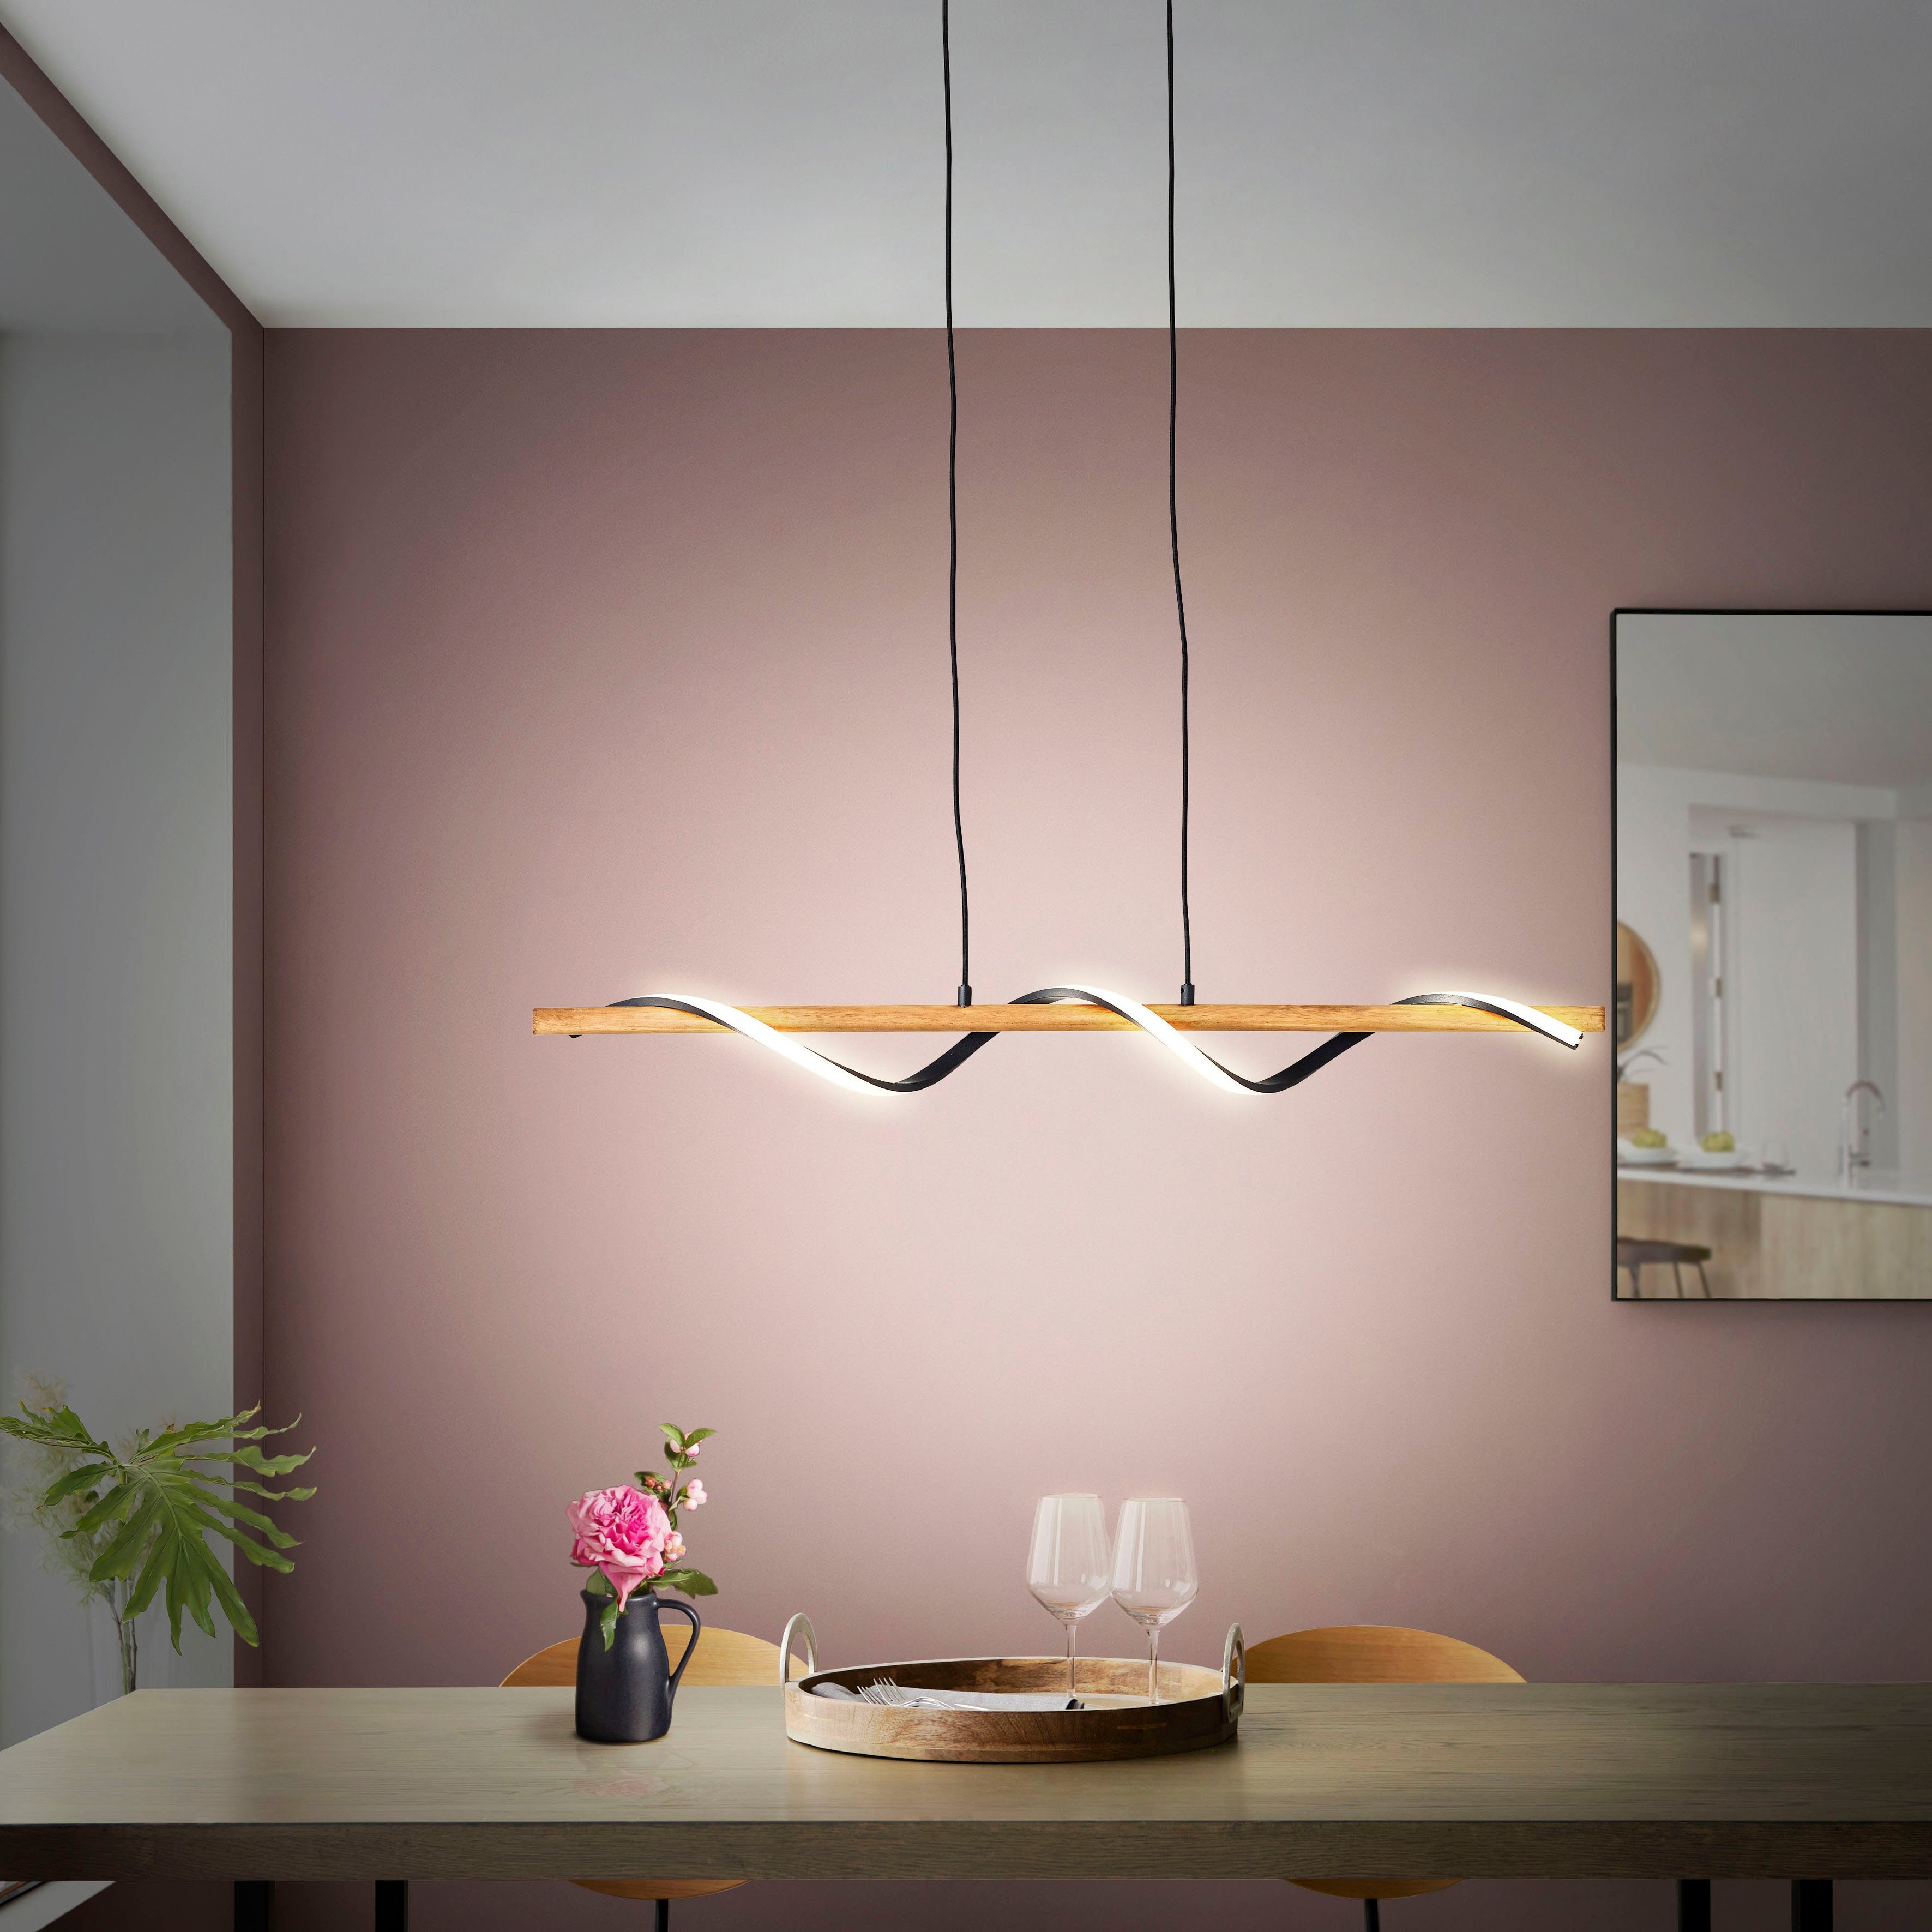 Home affaire Pendelleuchte Amanlis, LED fest integriert, Warmweiß,  Hängelampe über Wandschalter dimmbar, warmweißes Licht, Holz /Metall